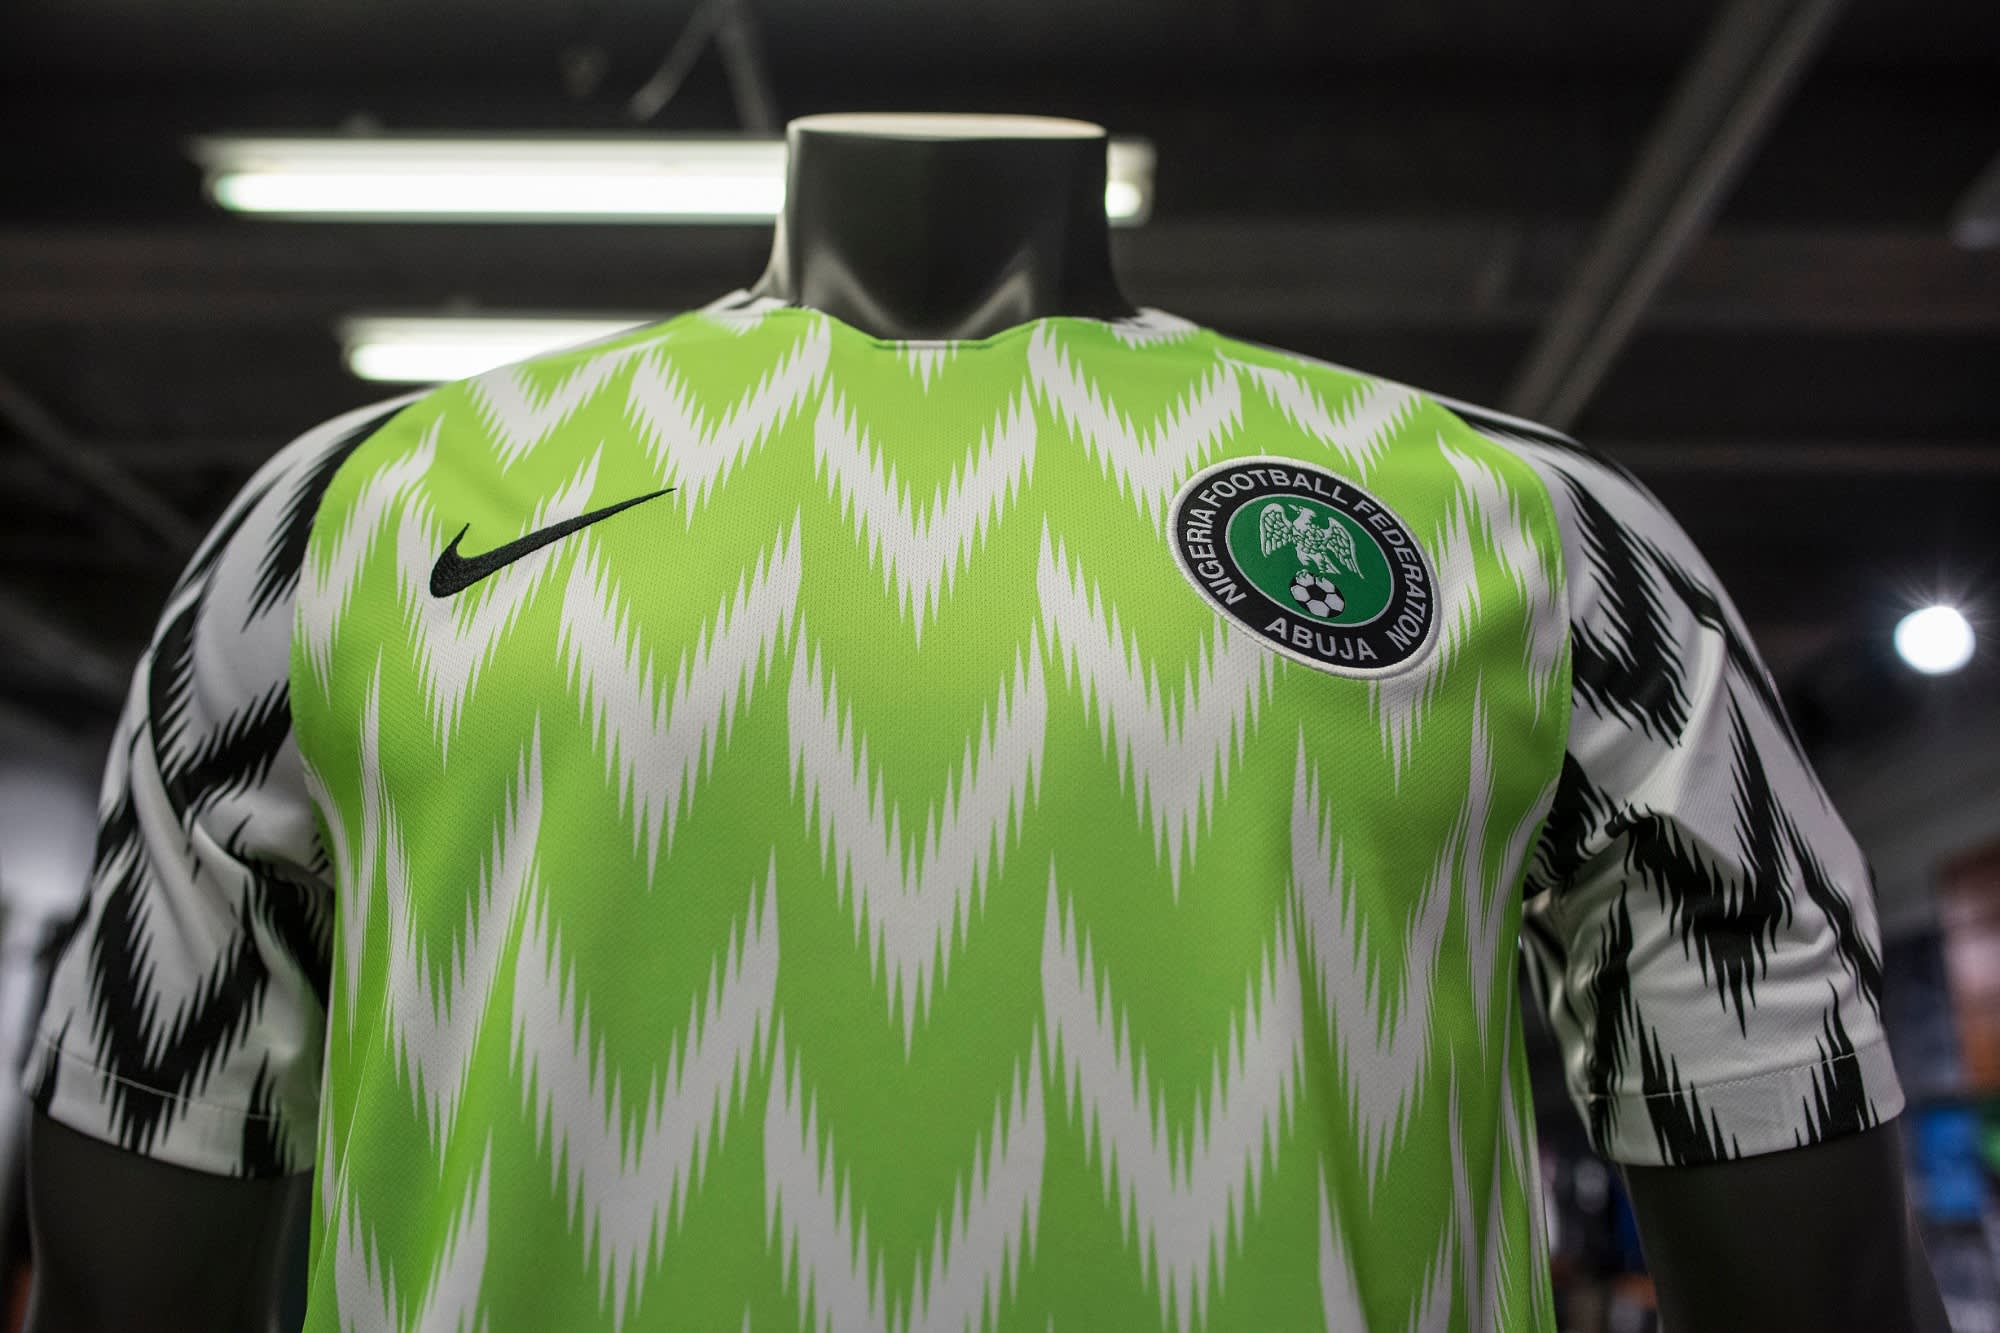 Nike's Nigerian World Cup jersey breaks sales records